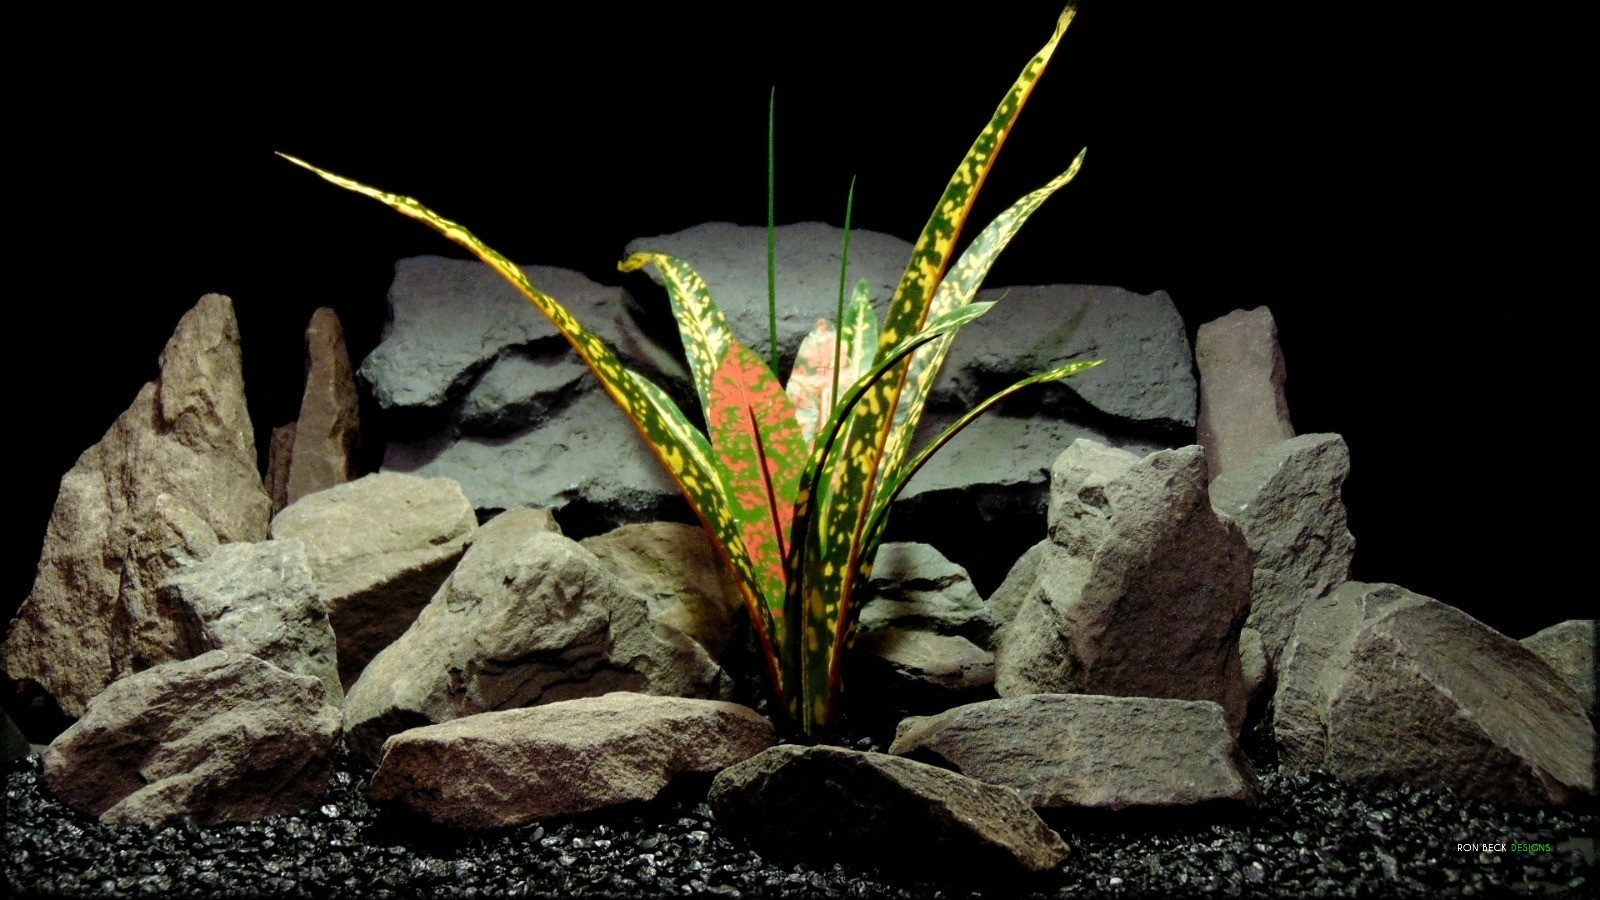 Artificial Croton Bush - Silk Reptile Habitat Plant - Ron Beck Designs srp397 (1)